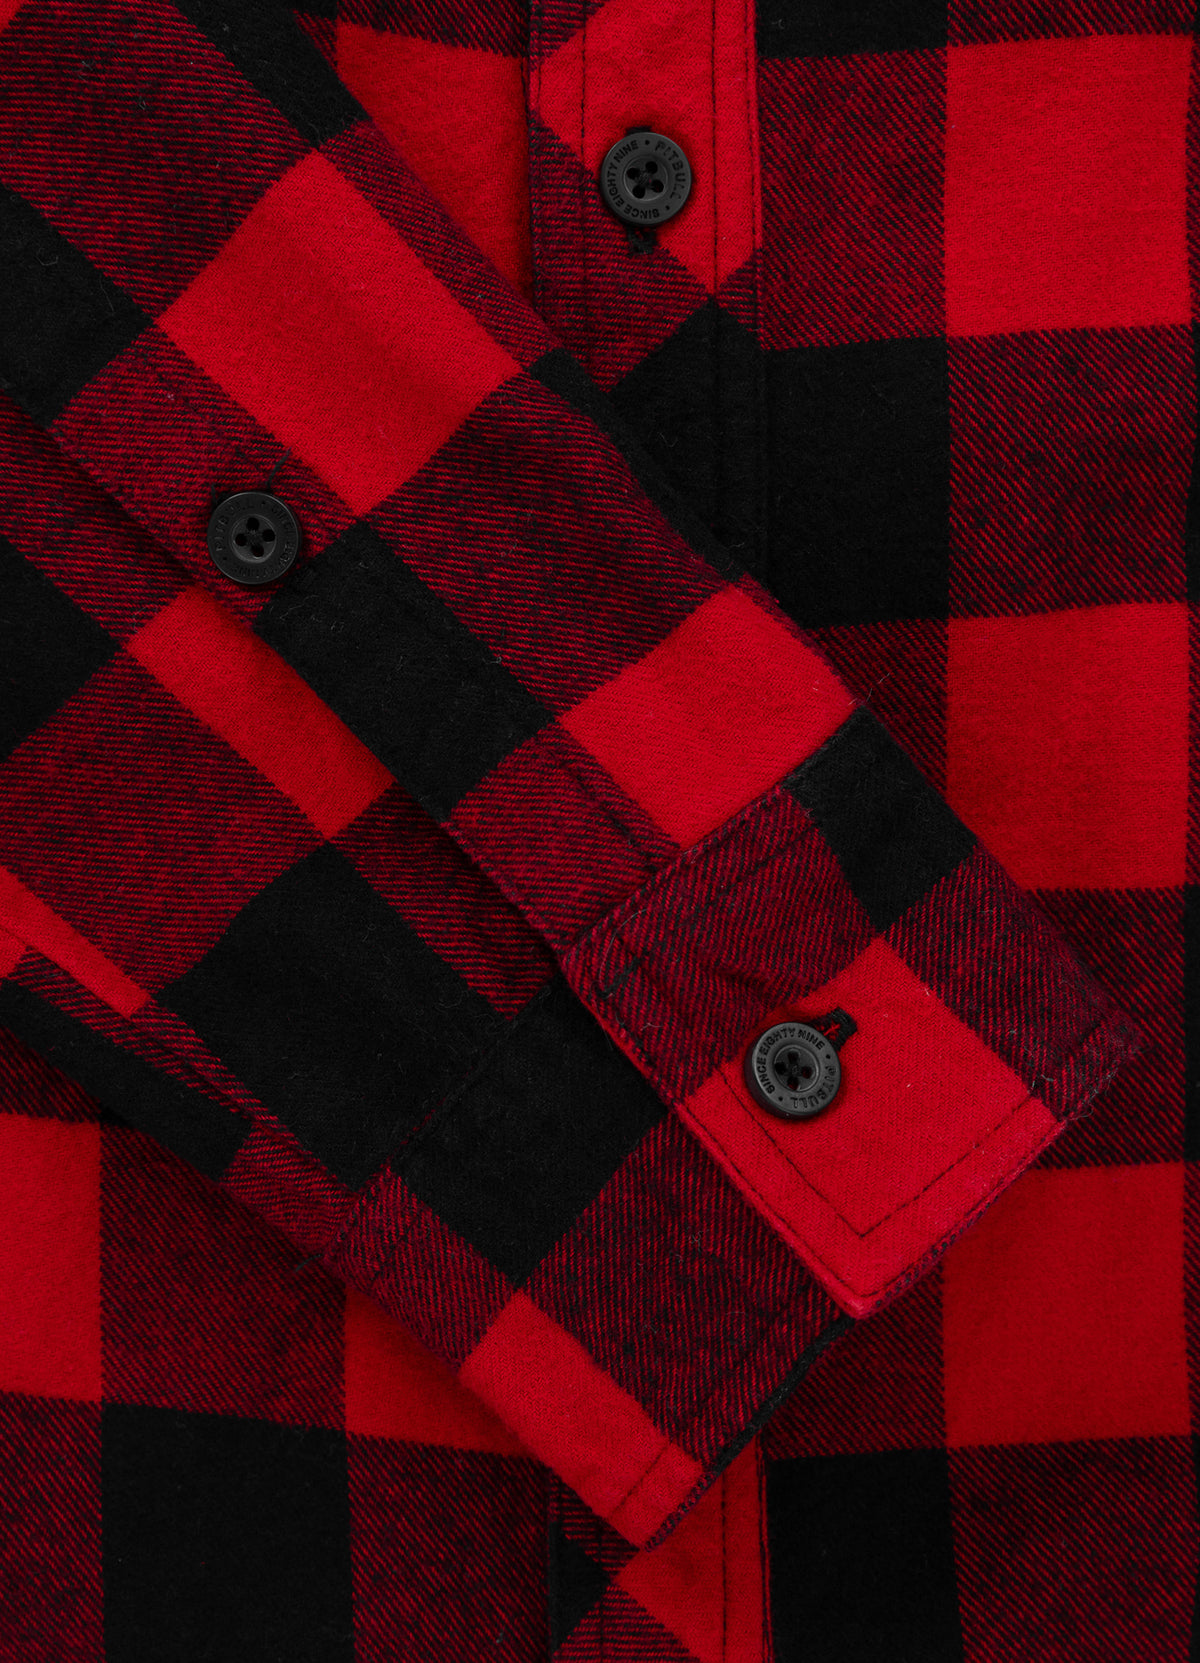 MITCHELL Red/Black Flannel Shirt - Pitbullstore.eu